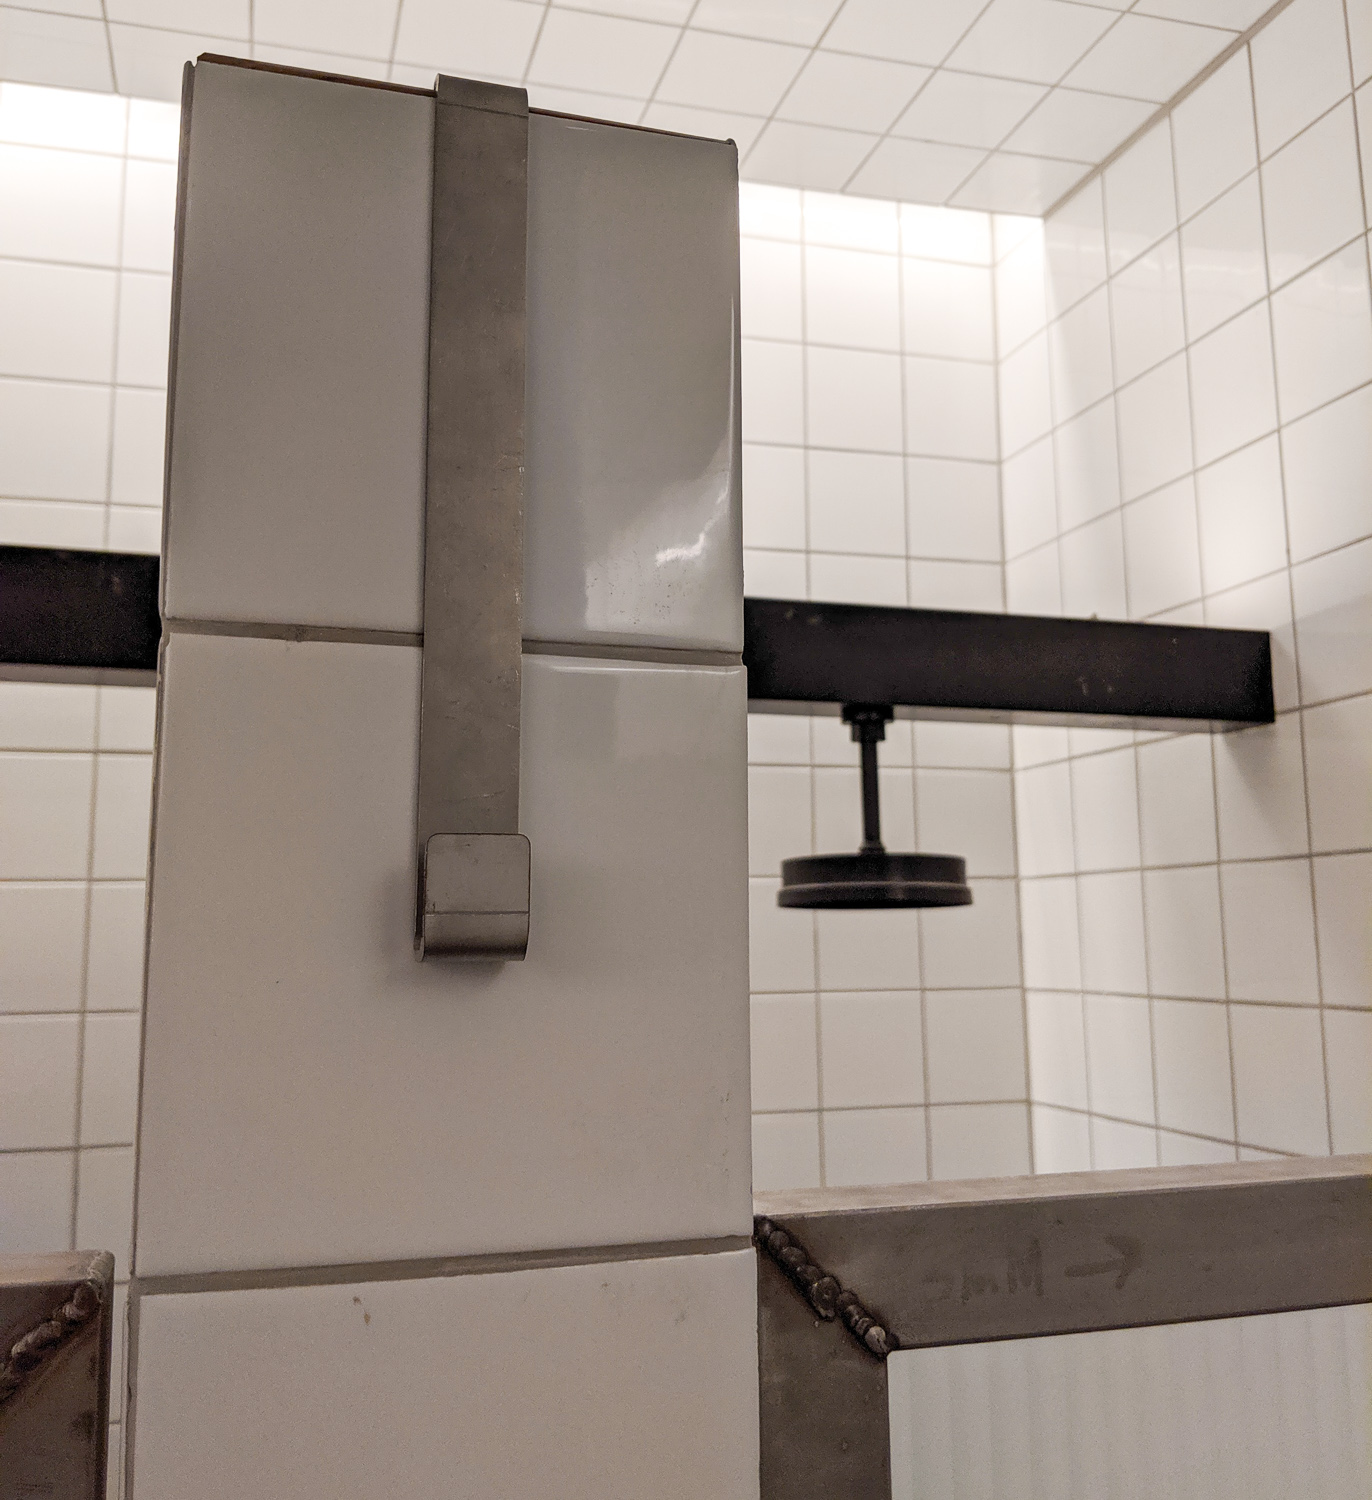 CHANGING ROOM HOOKS, Bespoke stainless steel towel hooks.
